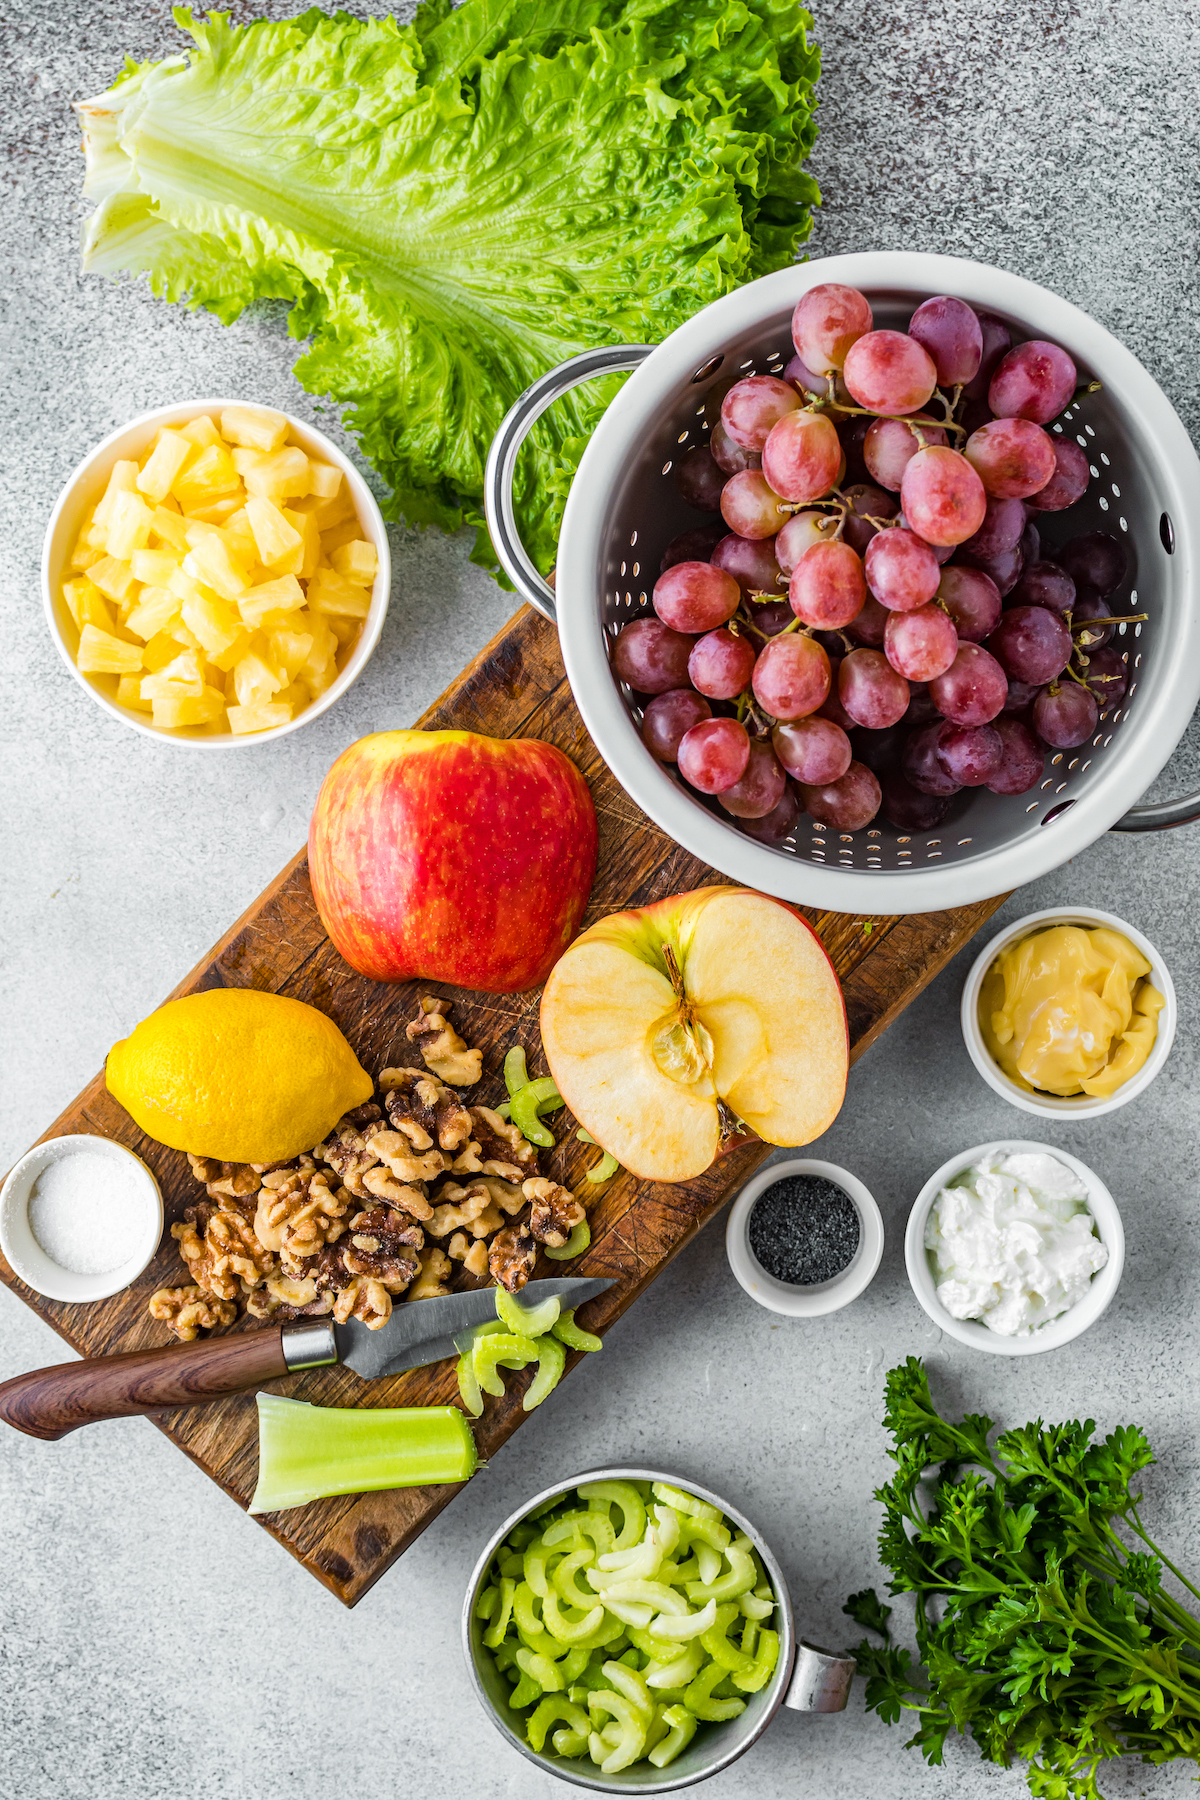 Left to right, from top: pineapple chunks, grapes, mayonnaise, greek yogurt, poppy seeds, mint, apple, chopped nuts, celery, lemon.